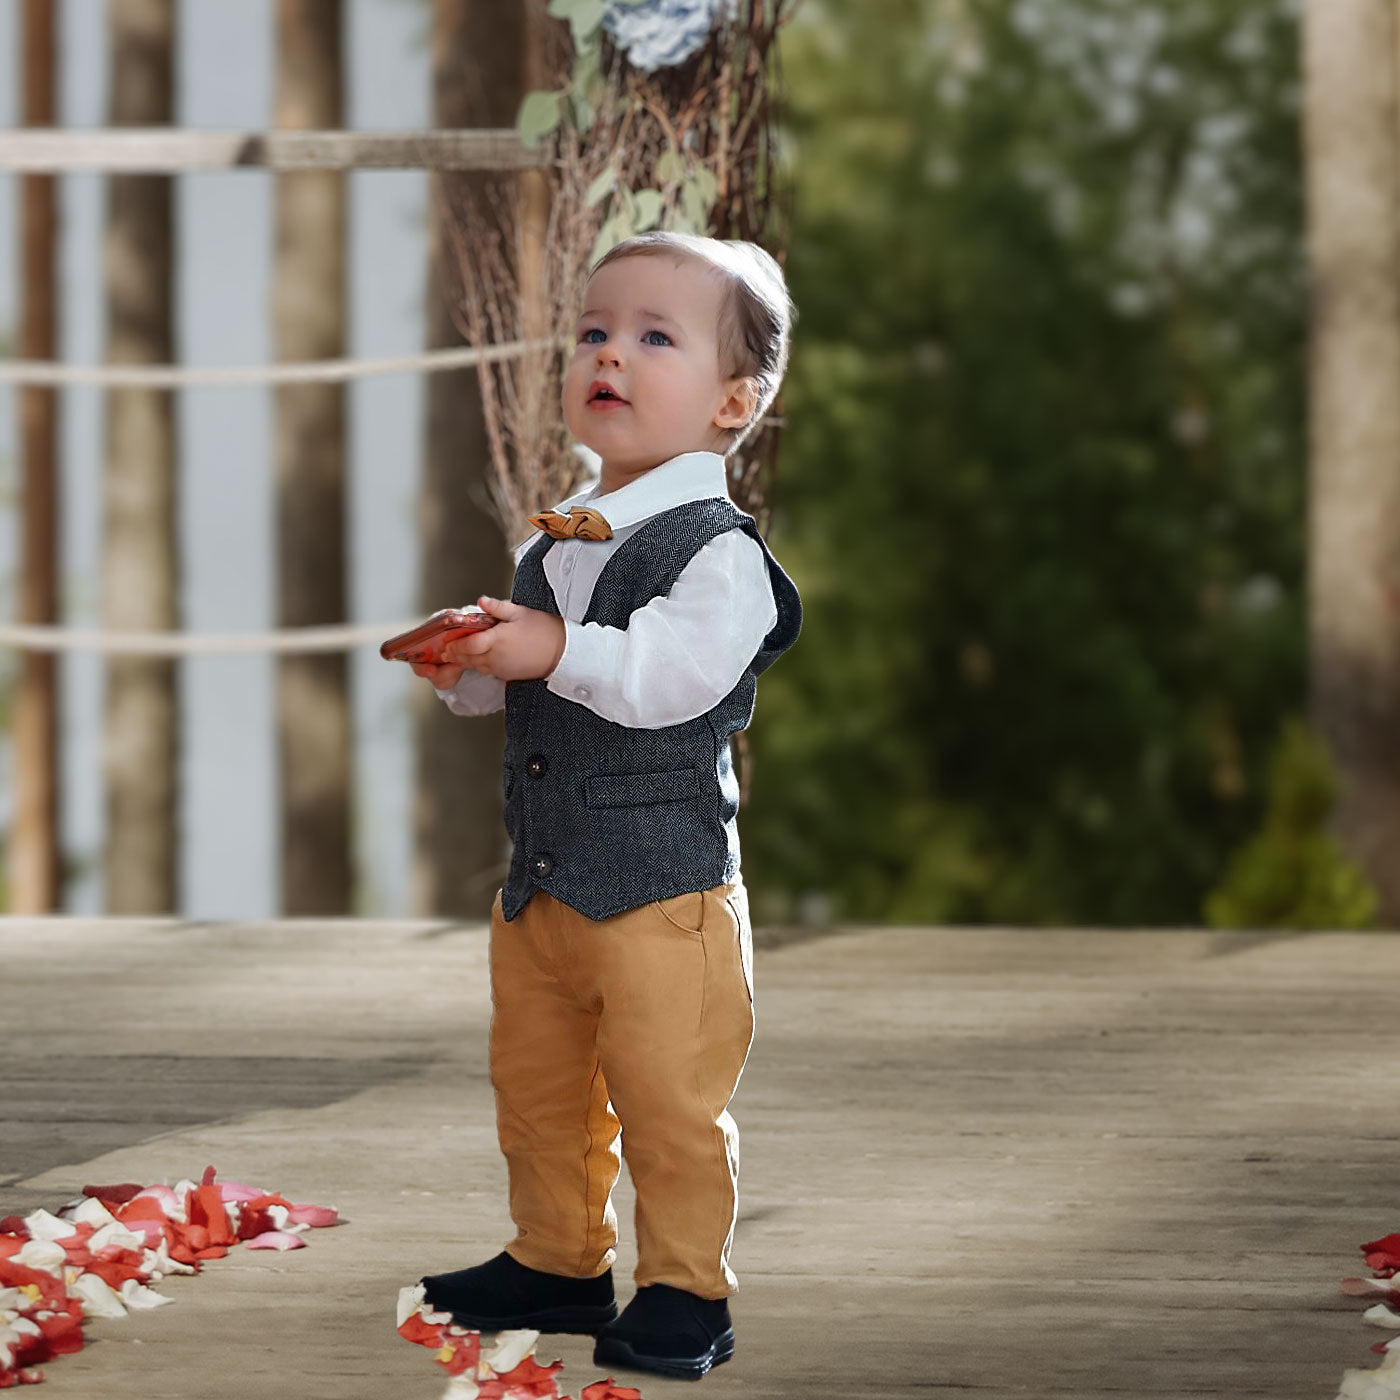 Tuxedo With Bow Tie Baby Boy Baby Bodysuit – Tstars